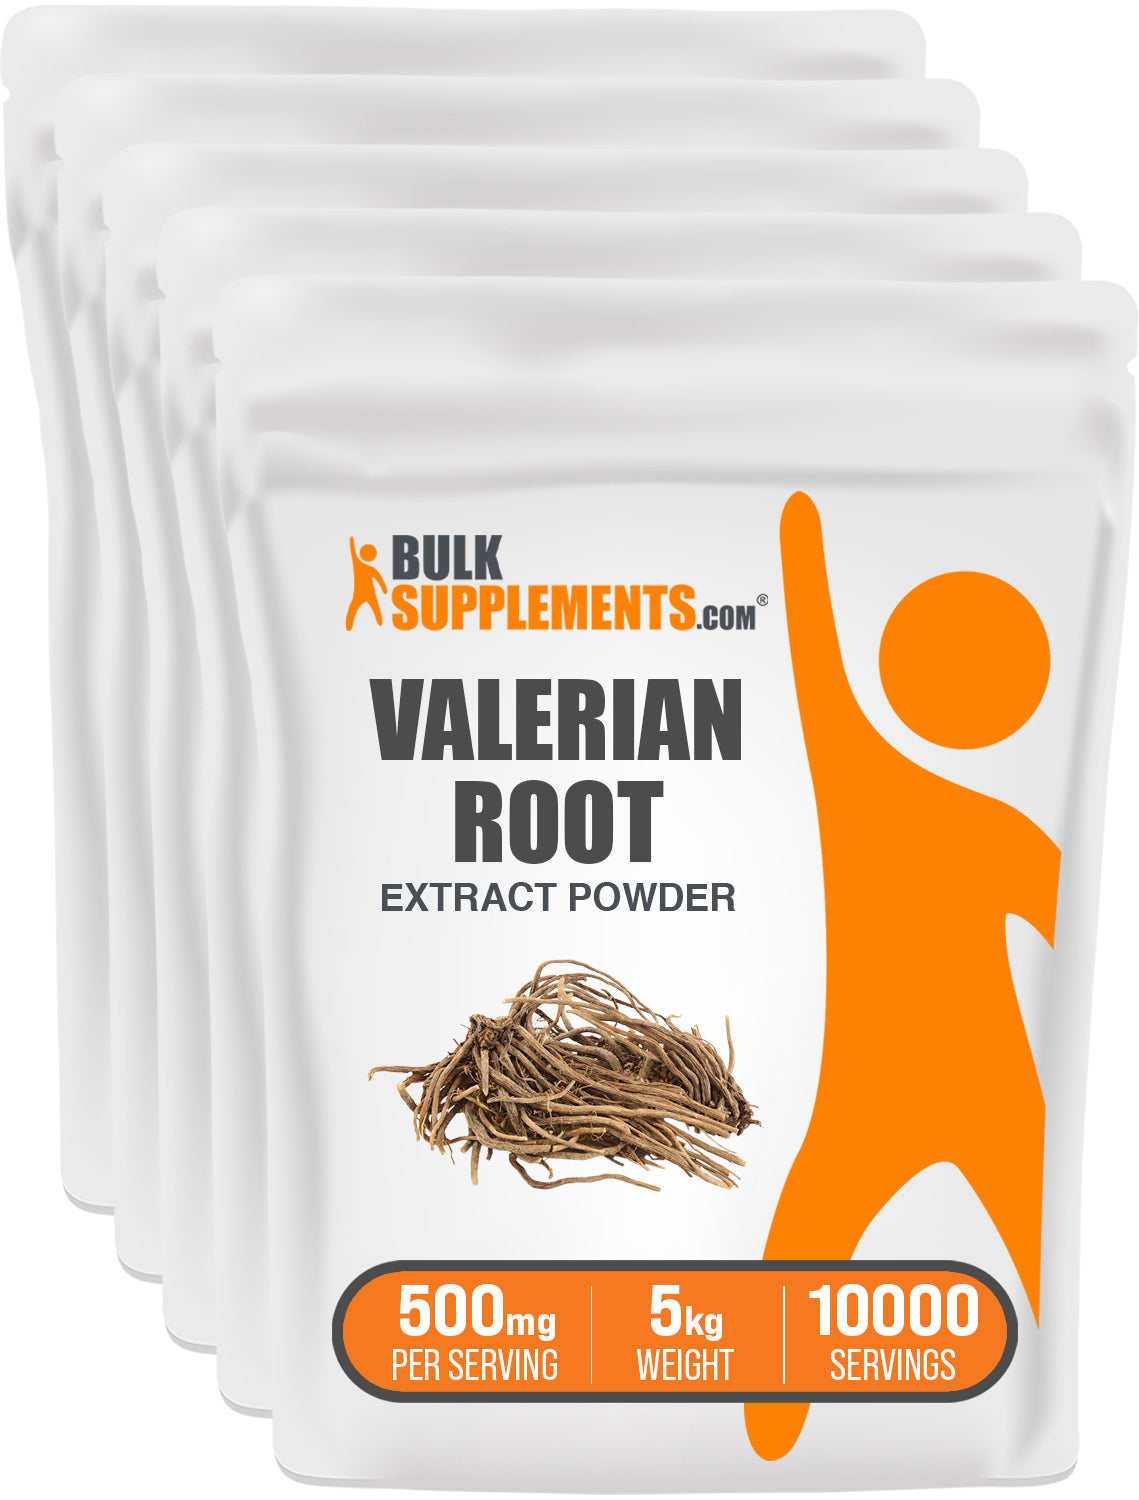 BulkSupplements Valerian Root Extract Powder 5kg bag